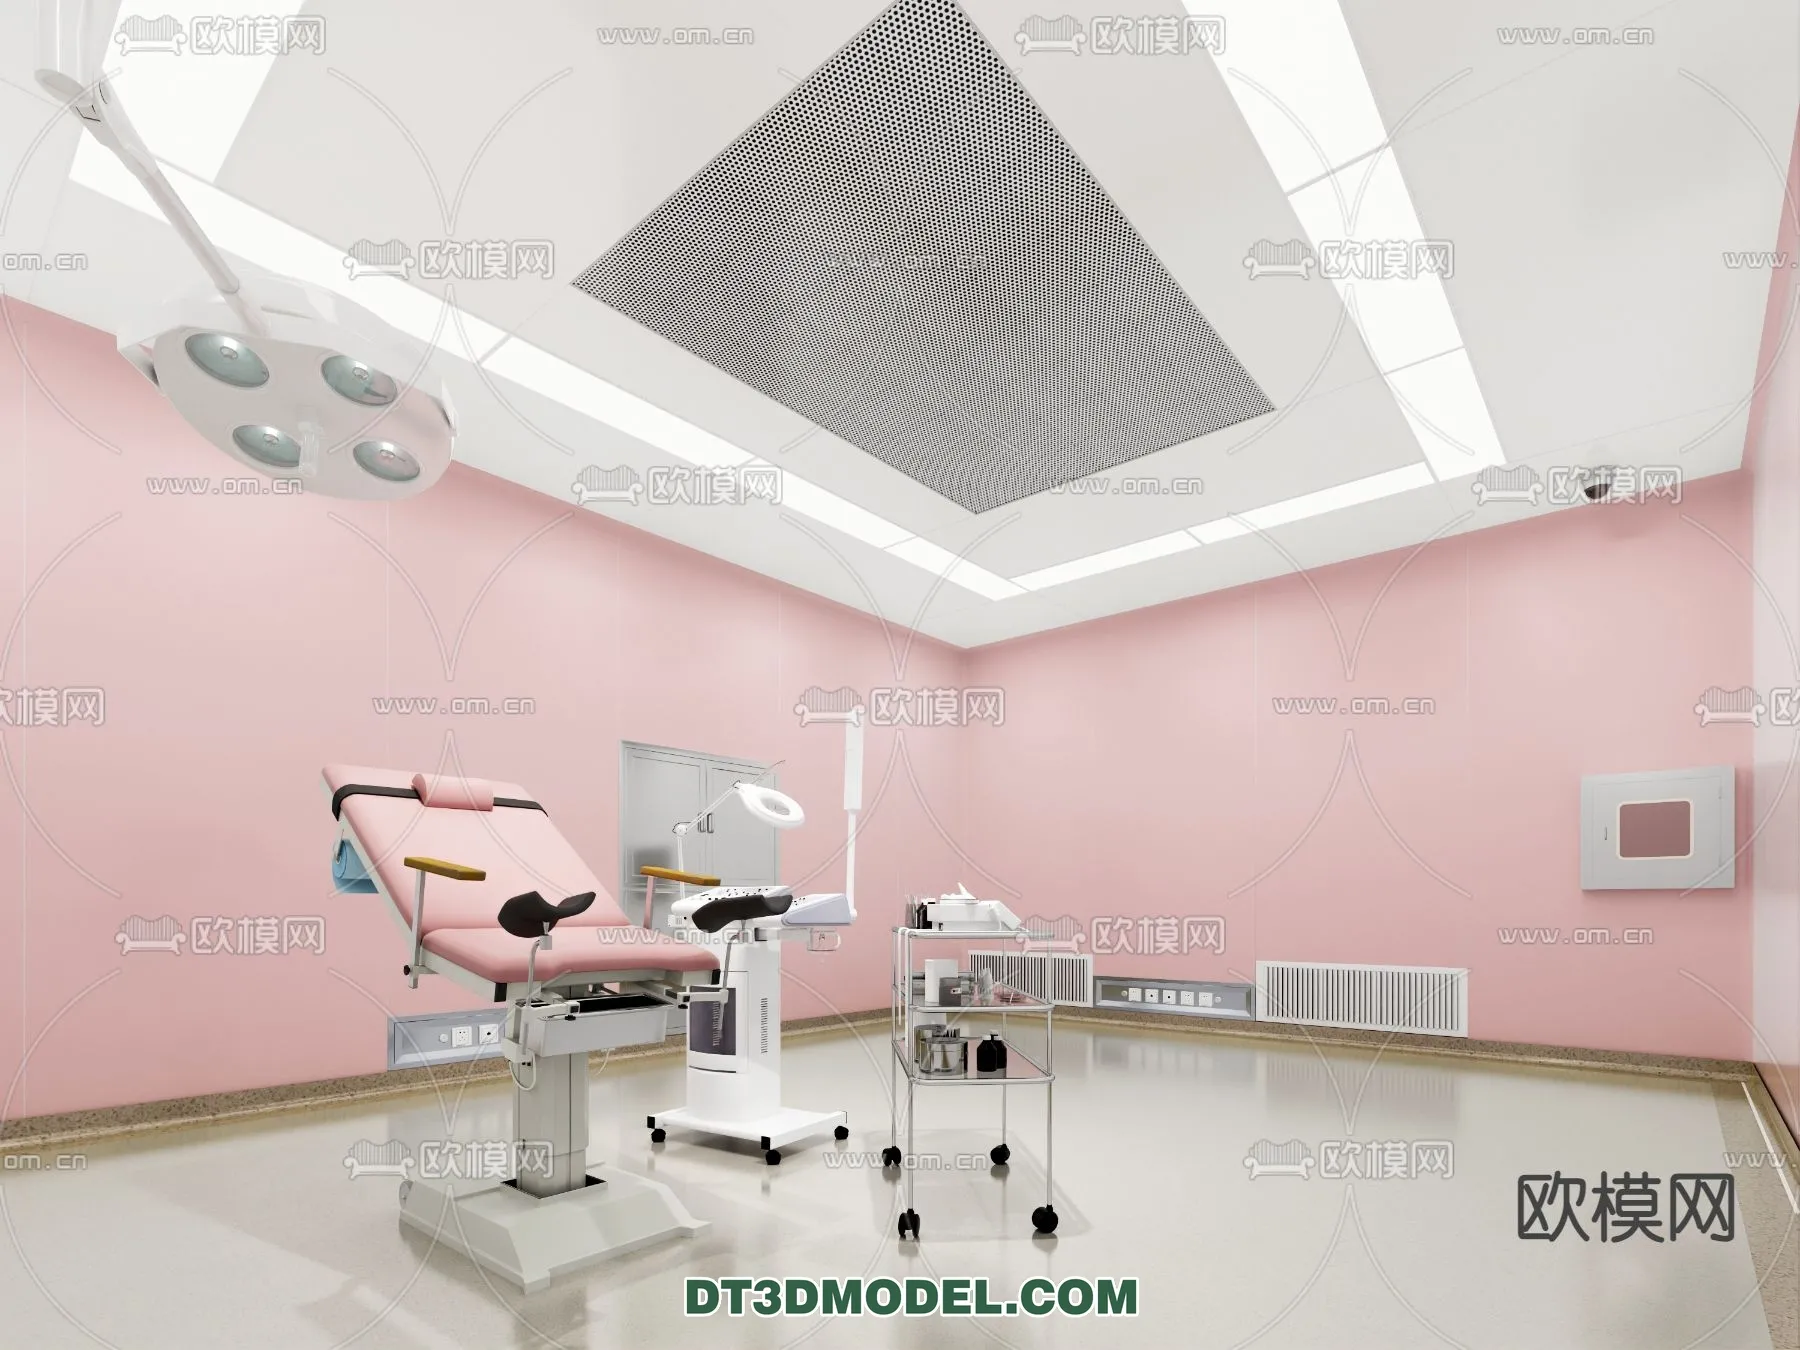 HOSPITAL 3D SCENES – MODERN – 0135